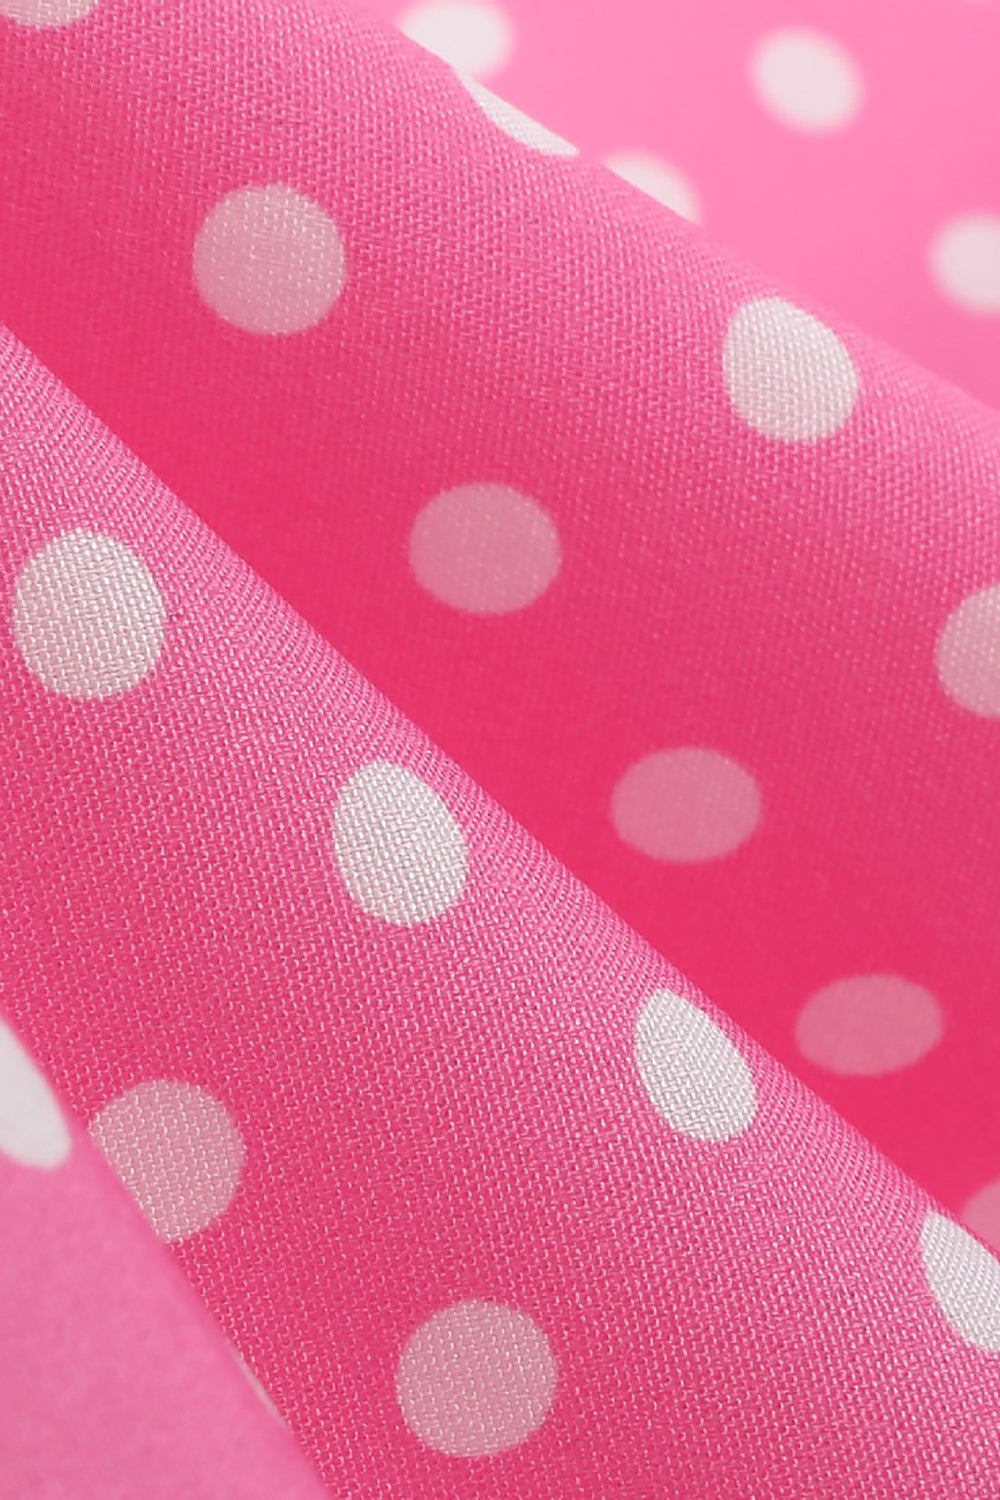 Pink Polka Dot Short Sleeves Peter Pan Vintage Dress